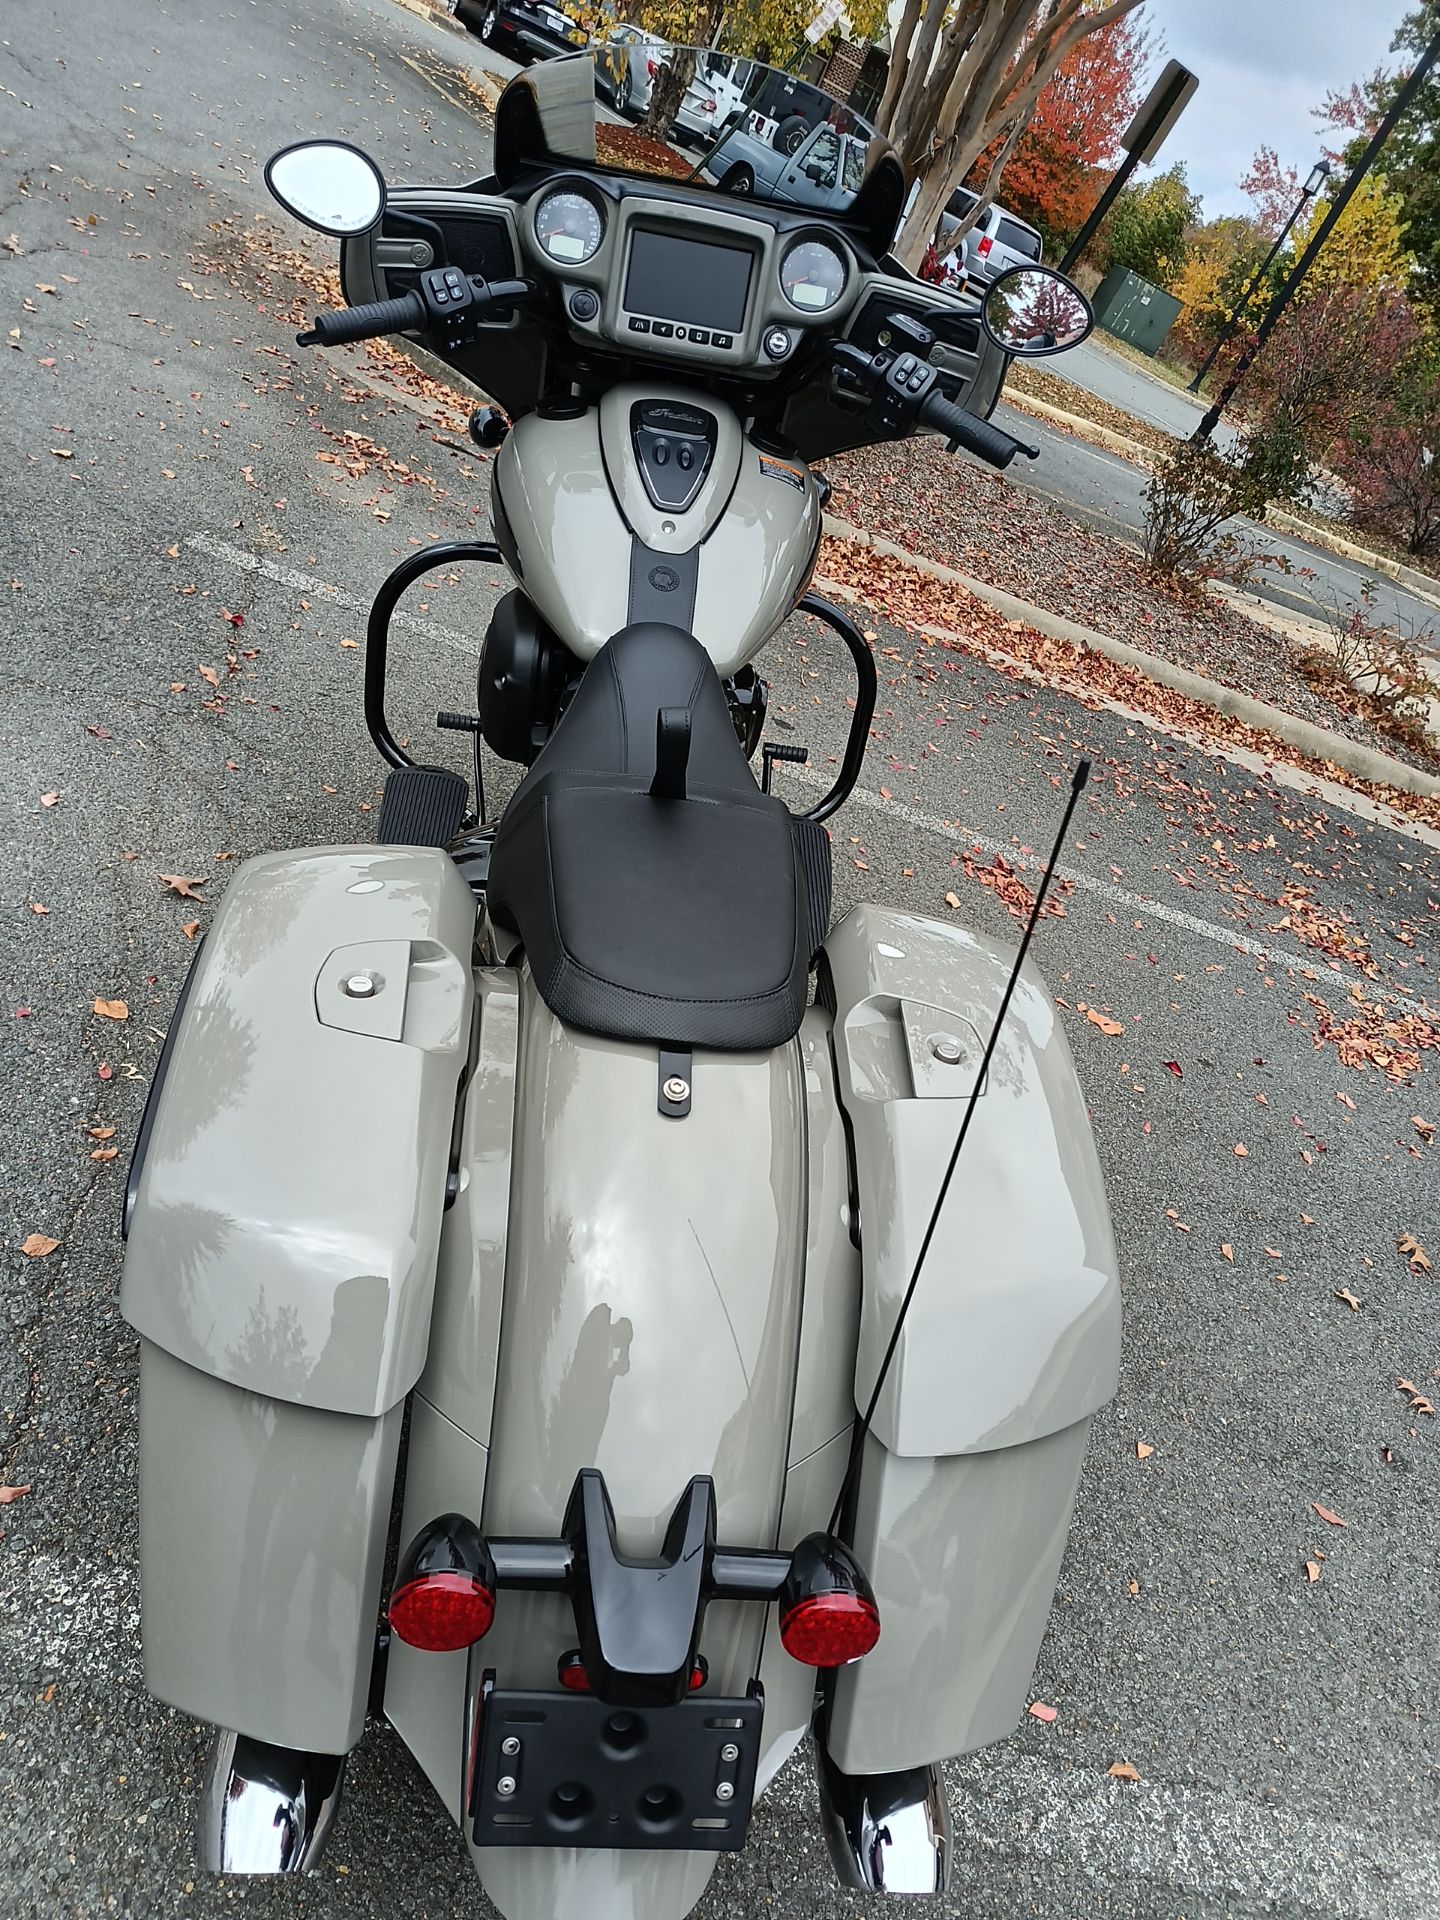 2022 Indian Motorcycle Chieftain® Dark Horse® in Fredericksburg, Virginia - Photo 4